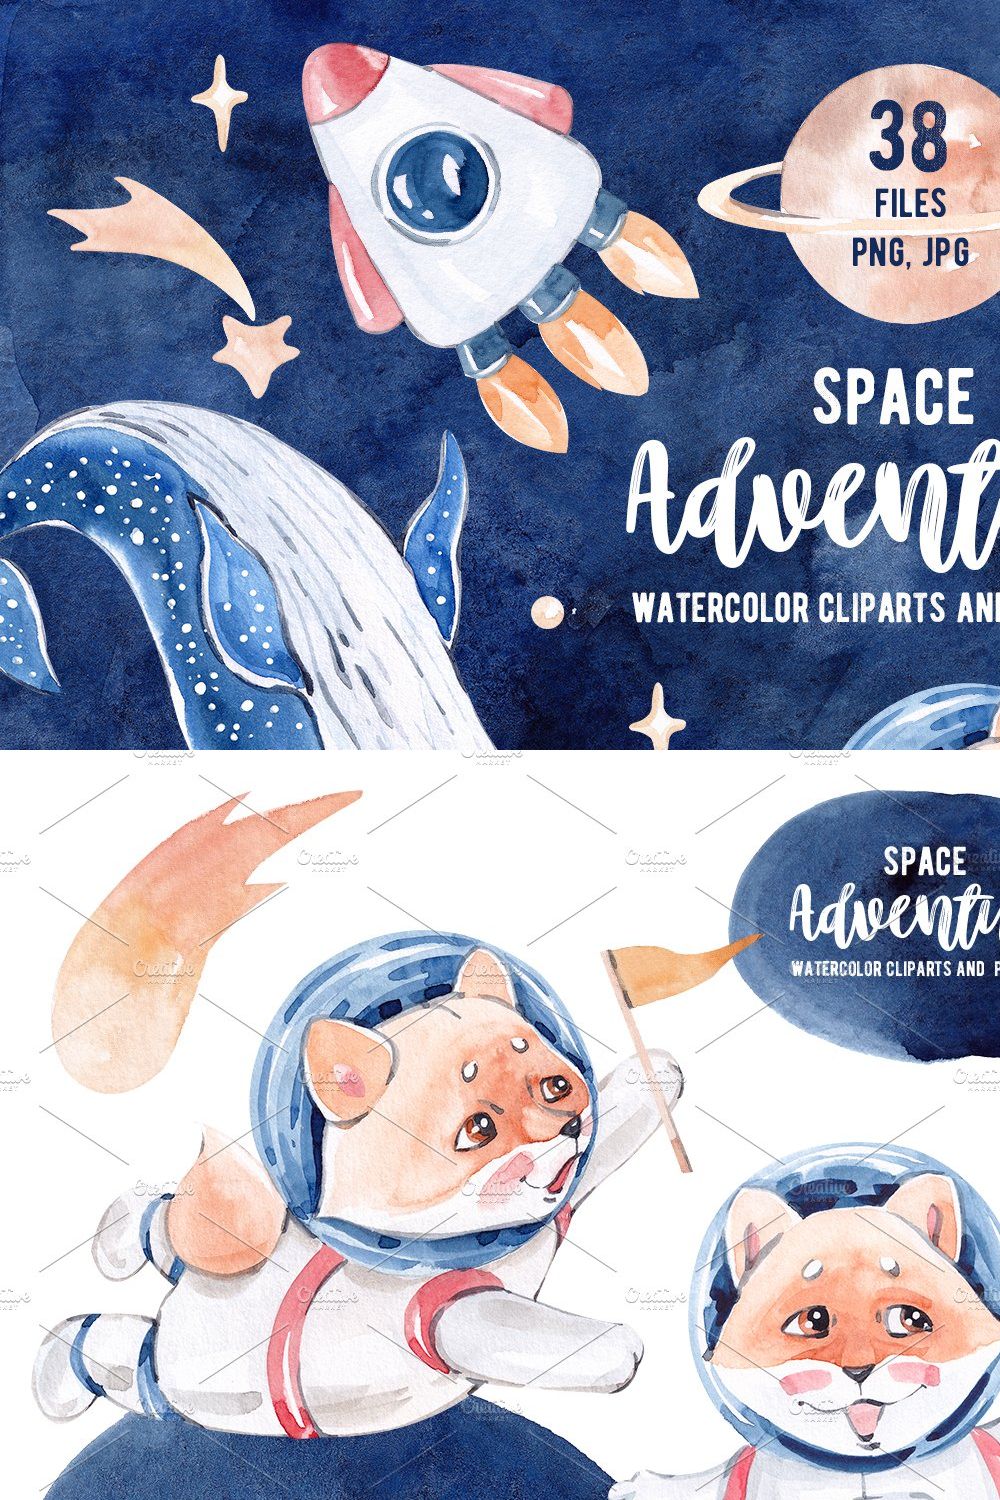 Space adventure. Watercolor set pinterest preview image.